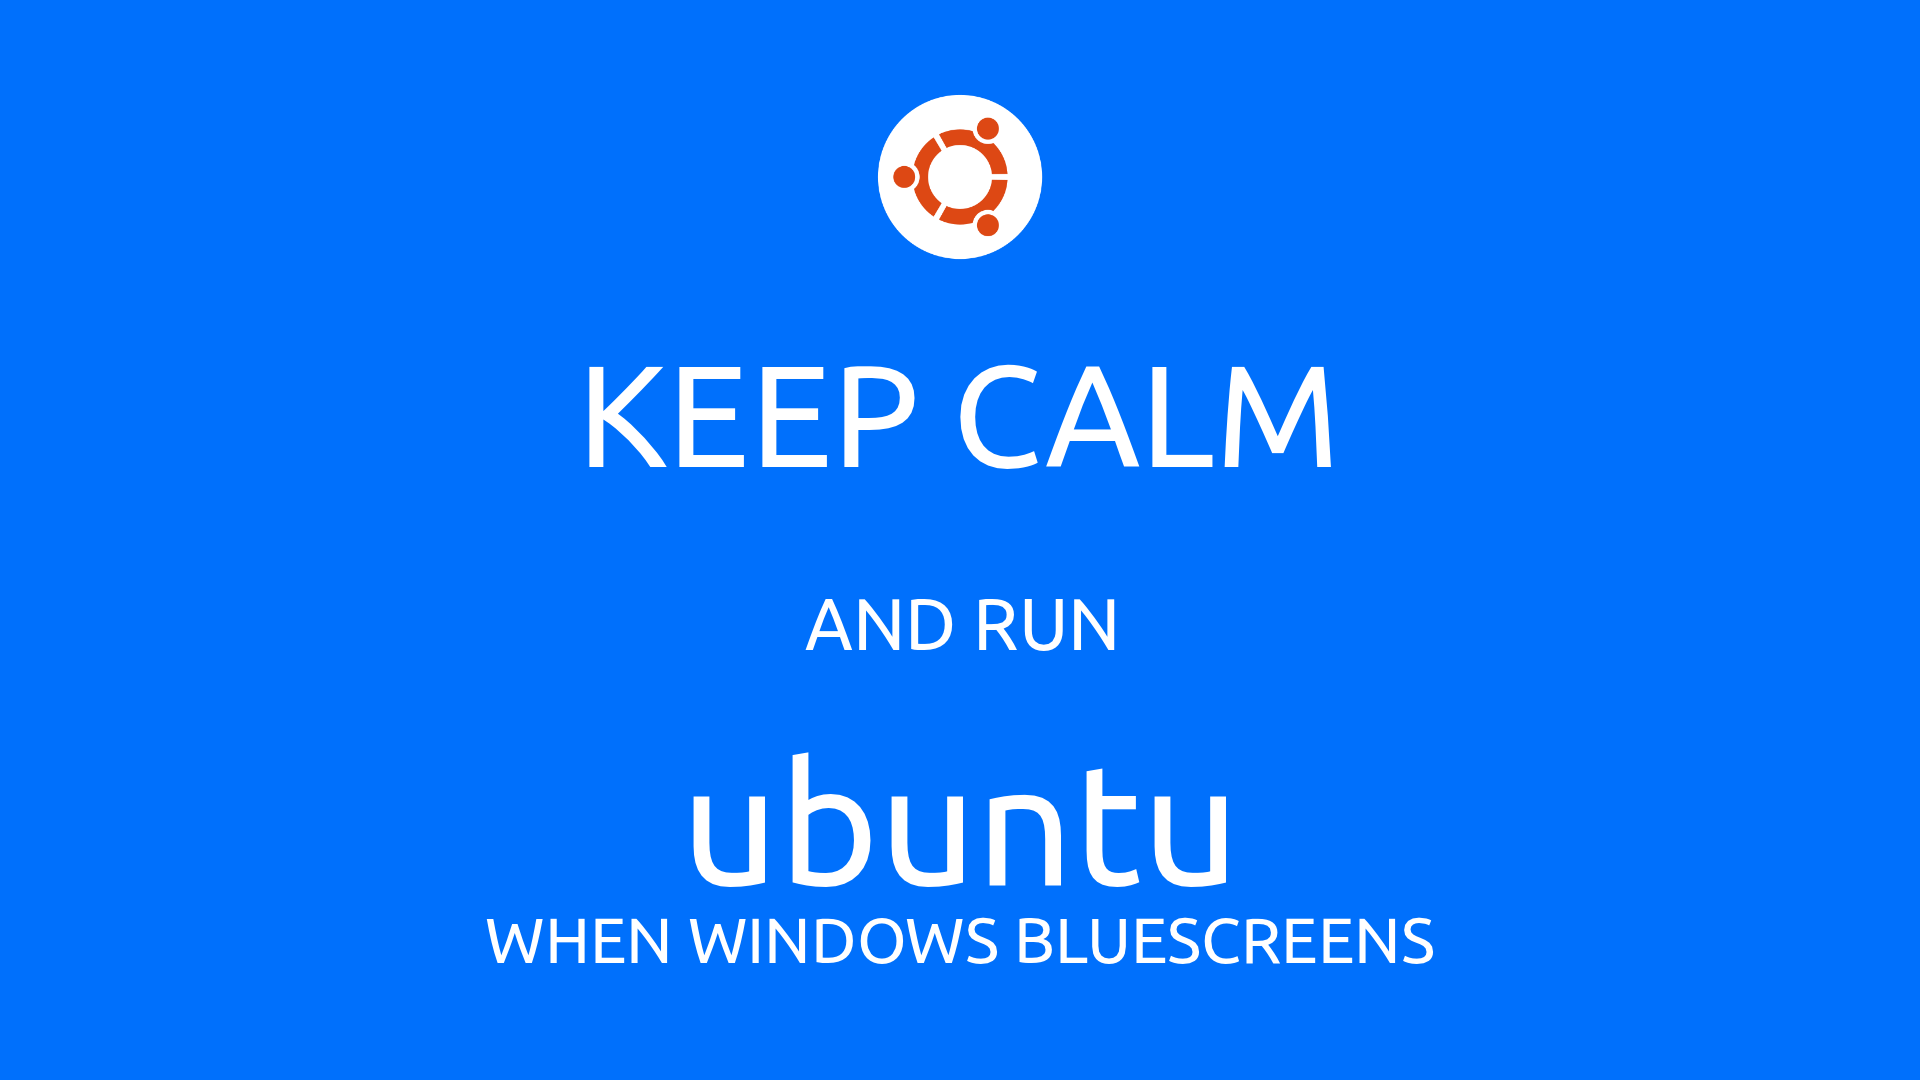 Keep Calm Ubuntu